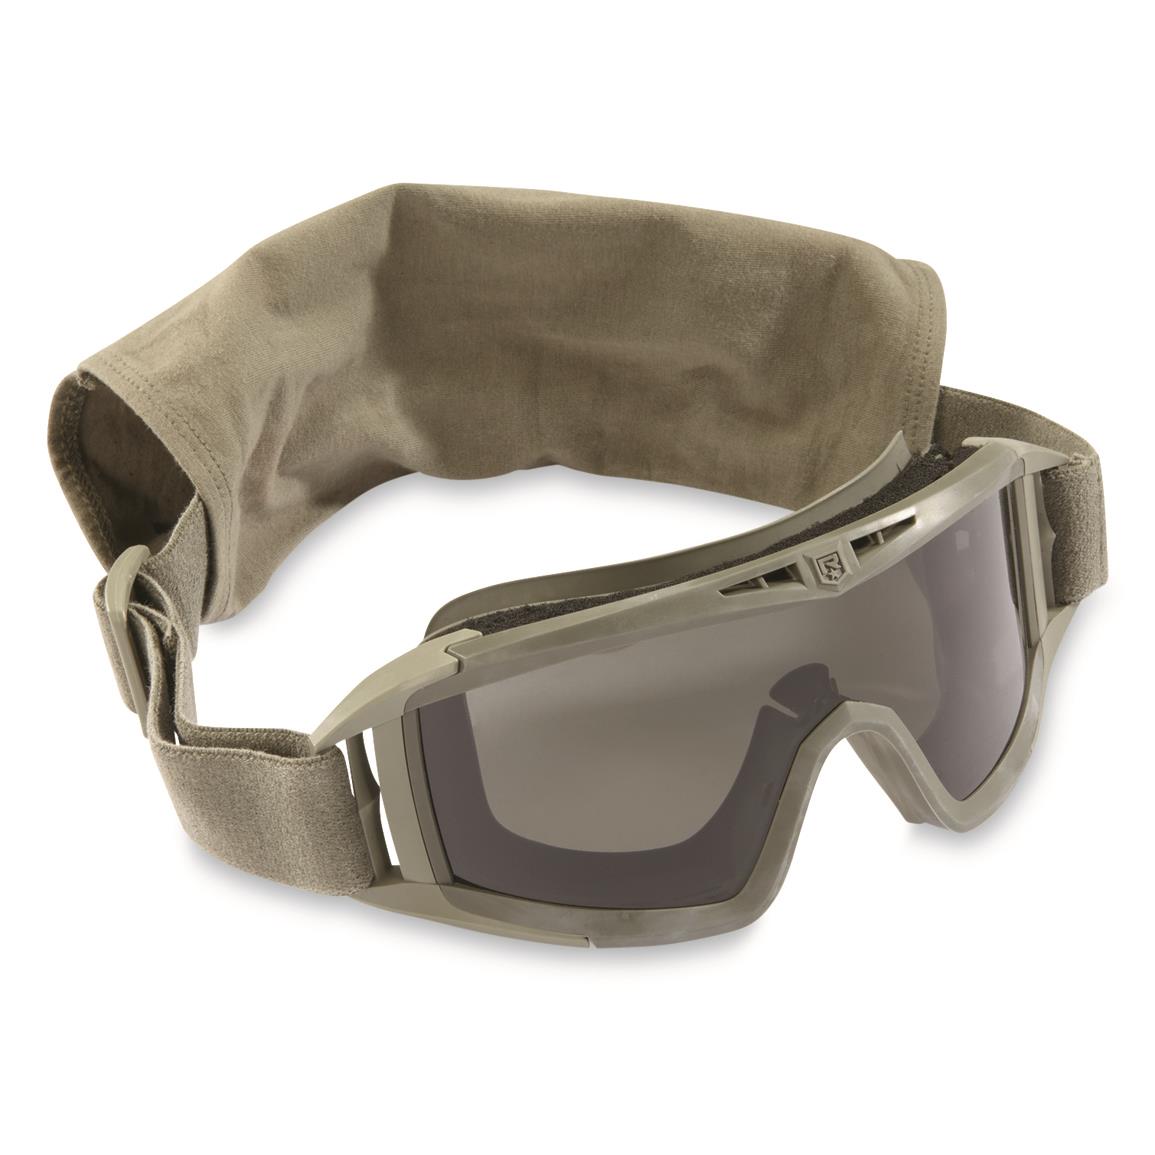 U.S. Military Surplus ESS Goggles, Used, Foliage